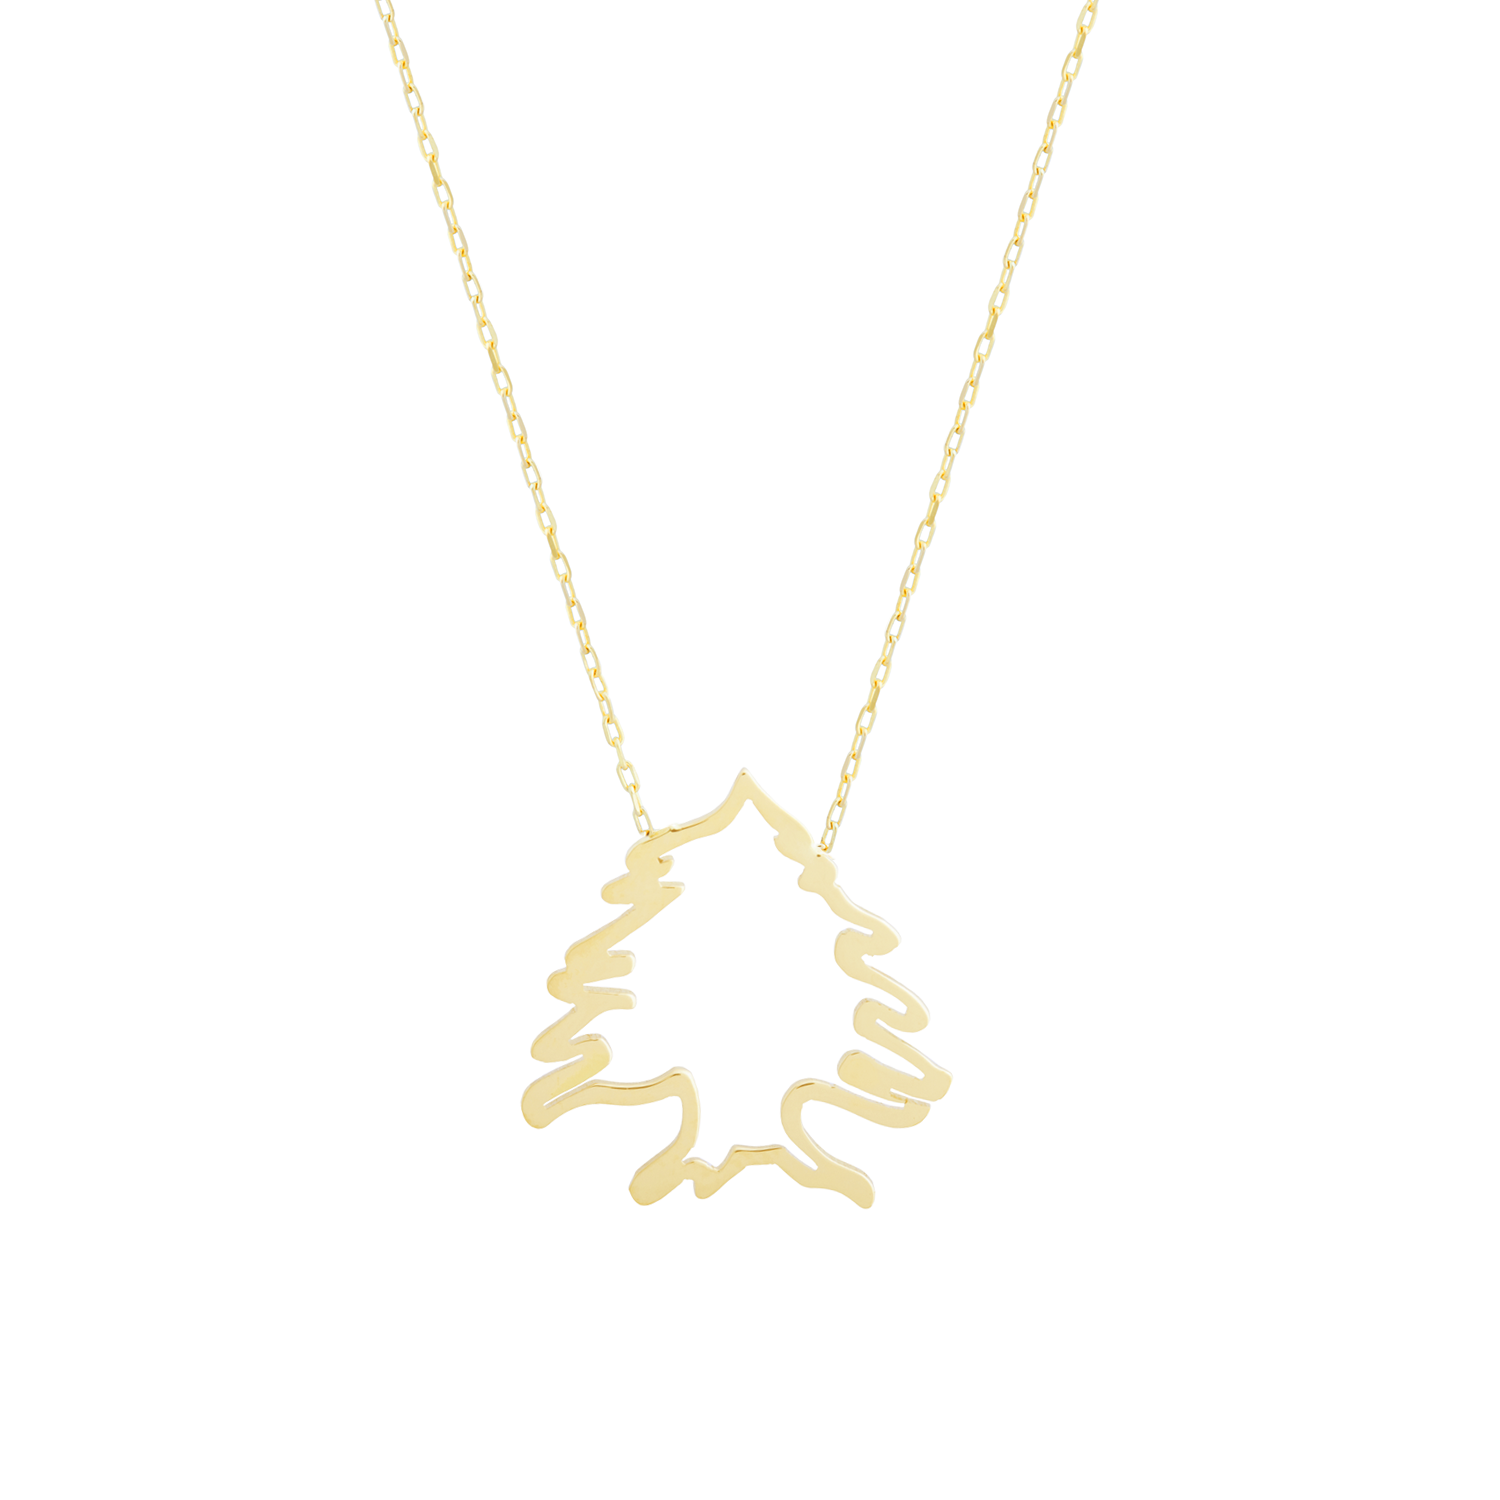 Lebanon Cedar Tree Gold Necklace